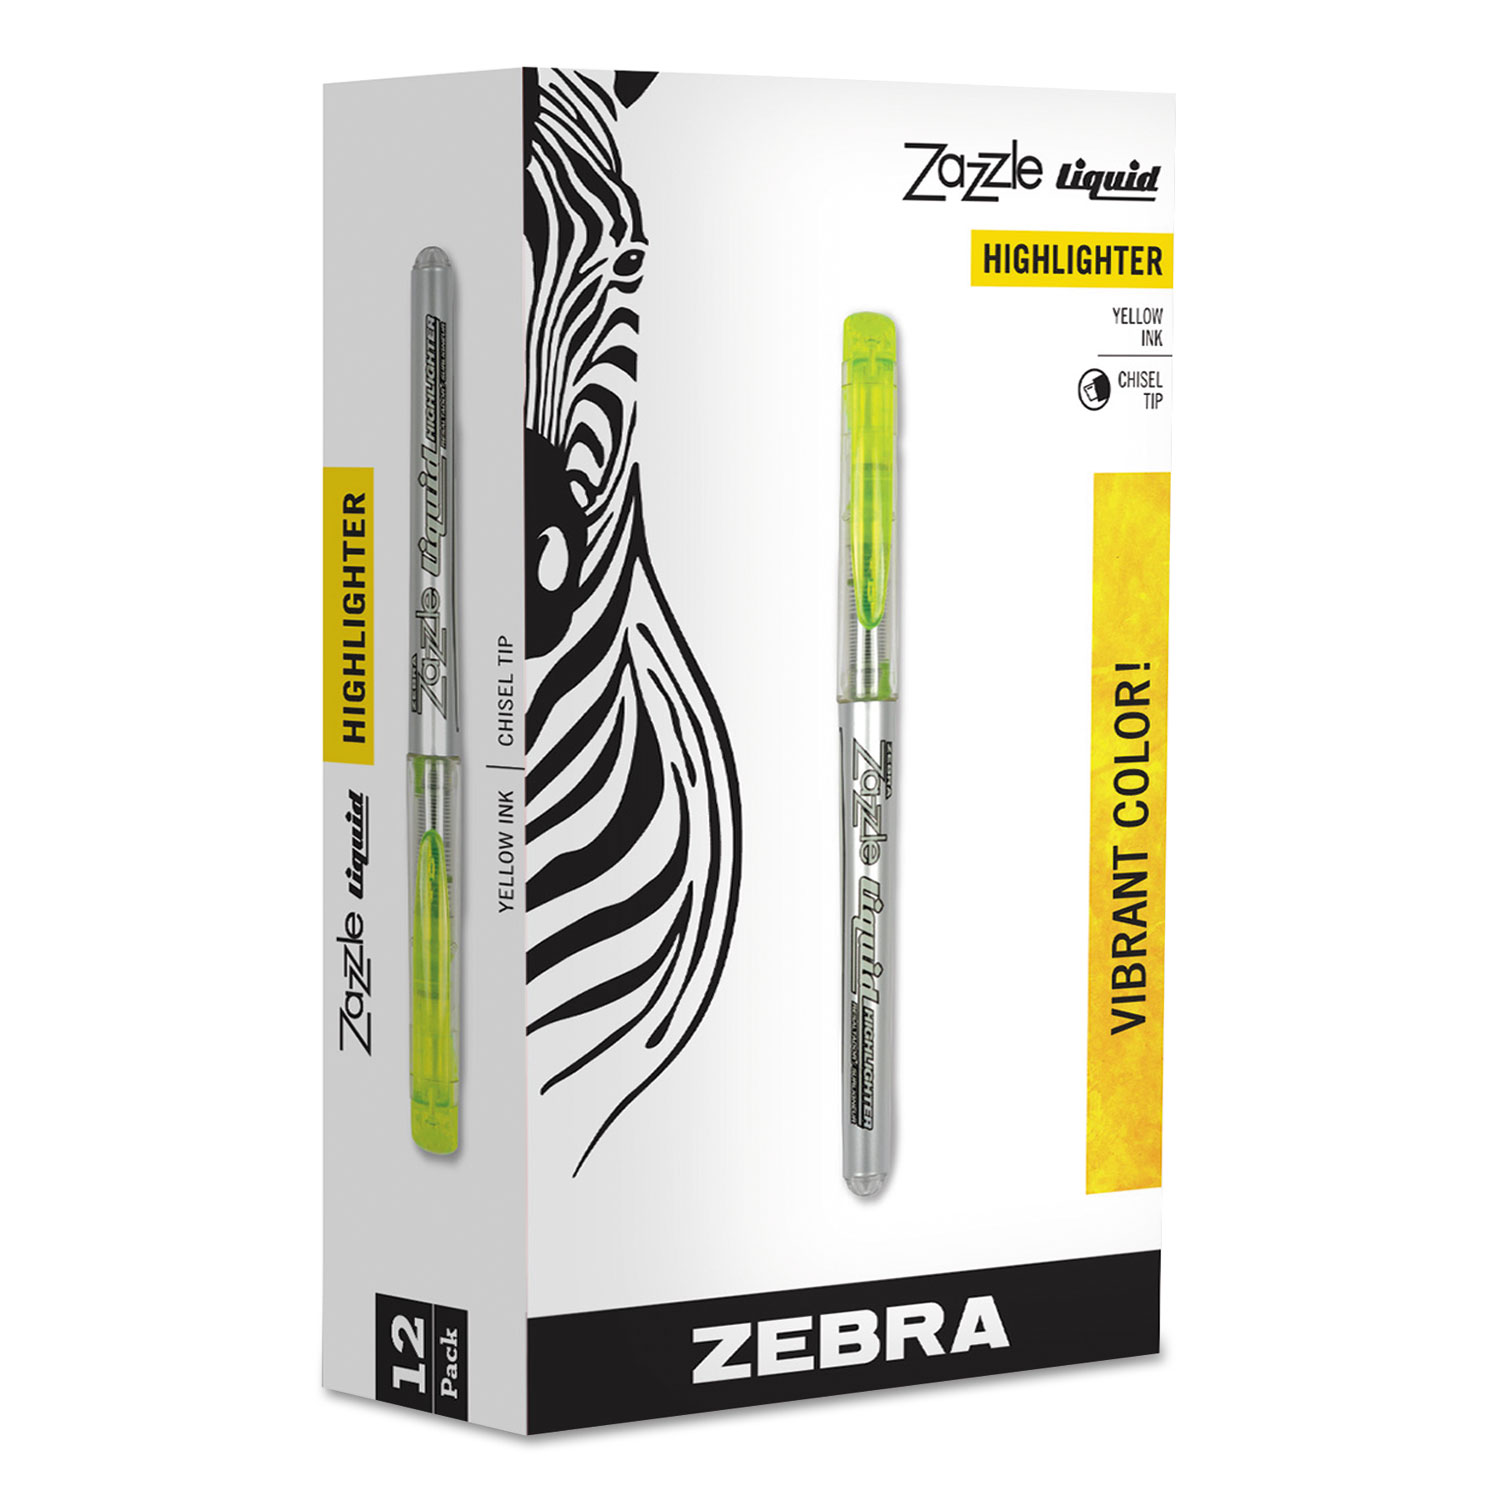 Zazzle Liquid Ink Highlighters, Chisel Tip, Yellow, Dozen